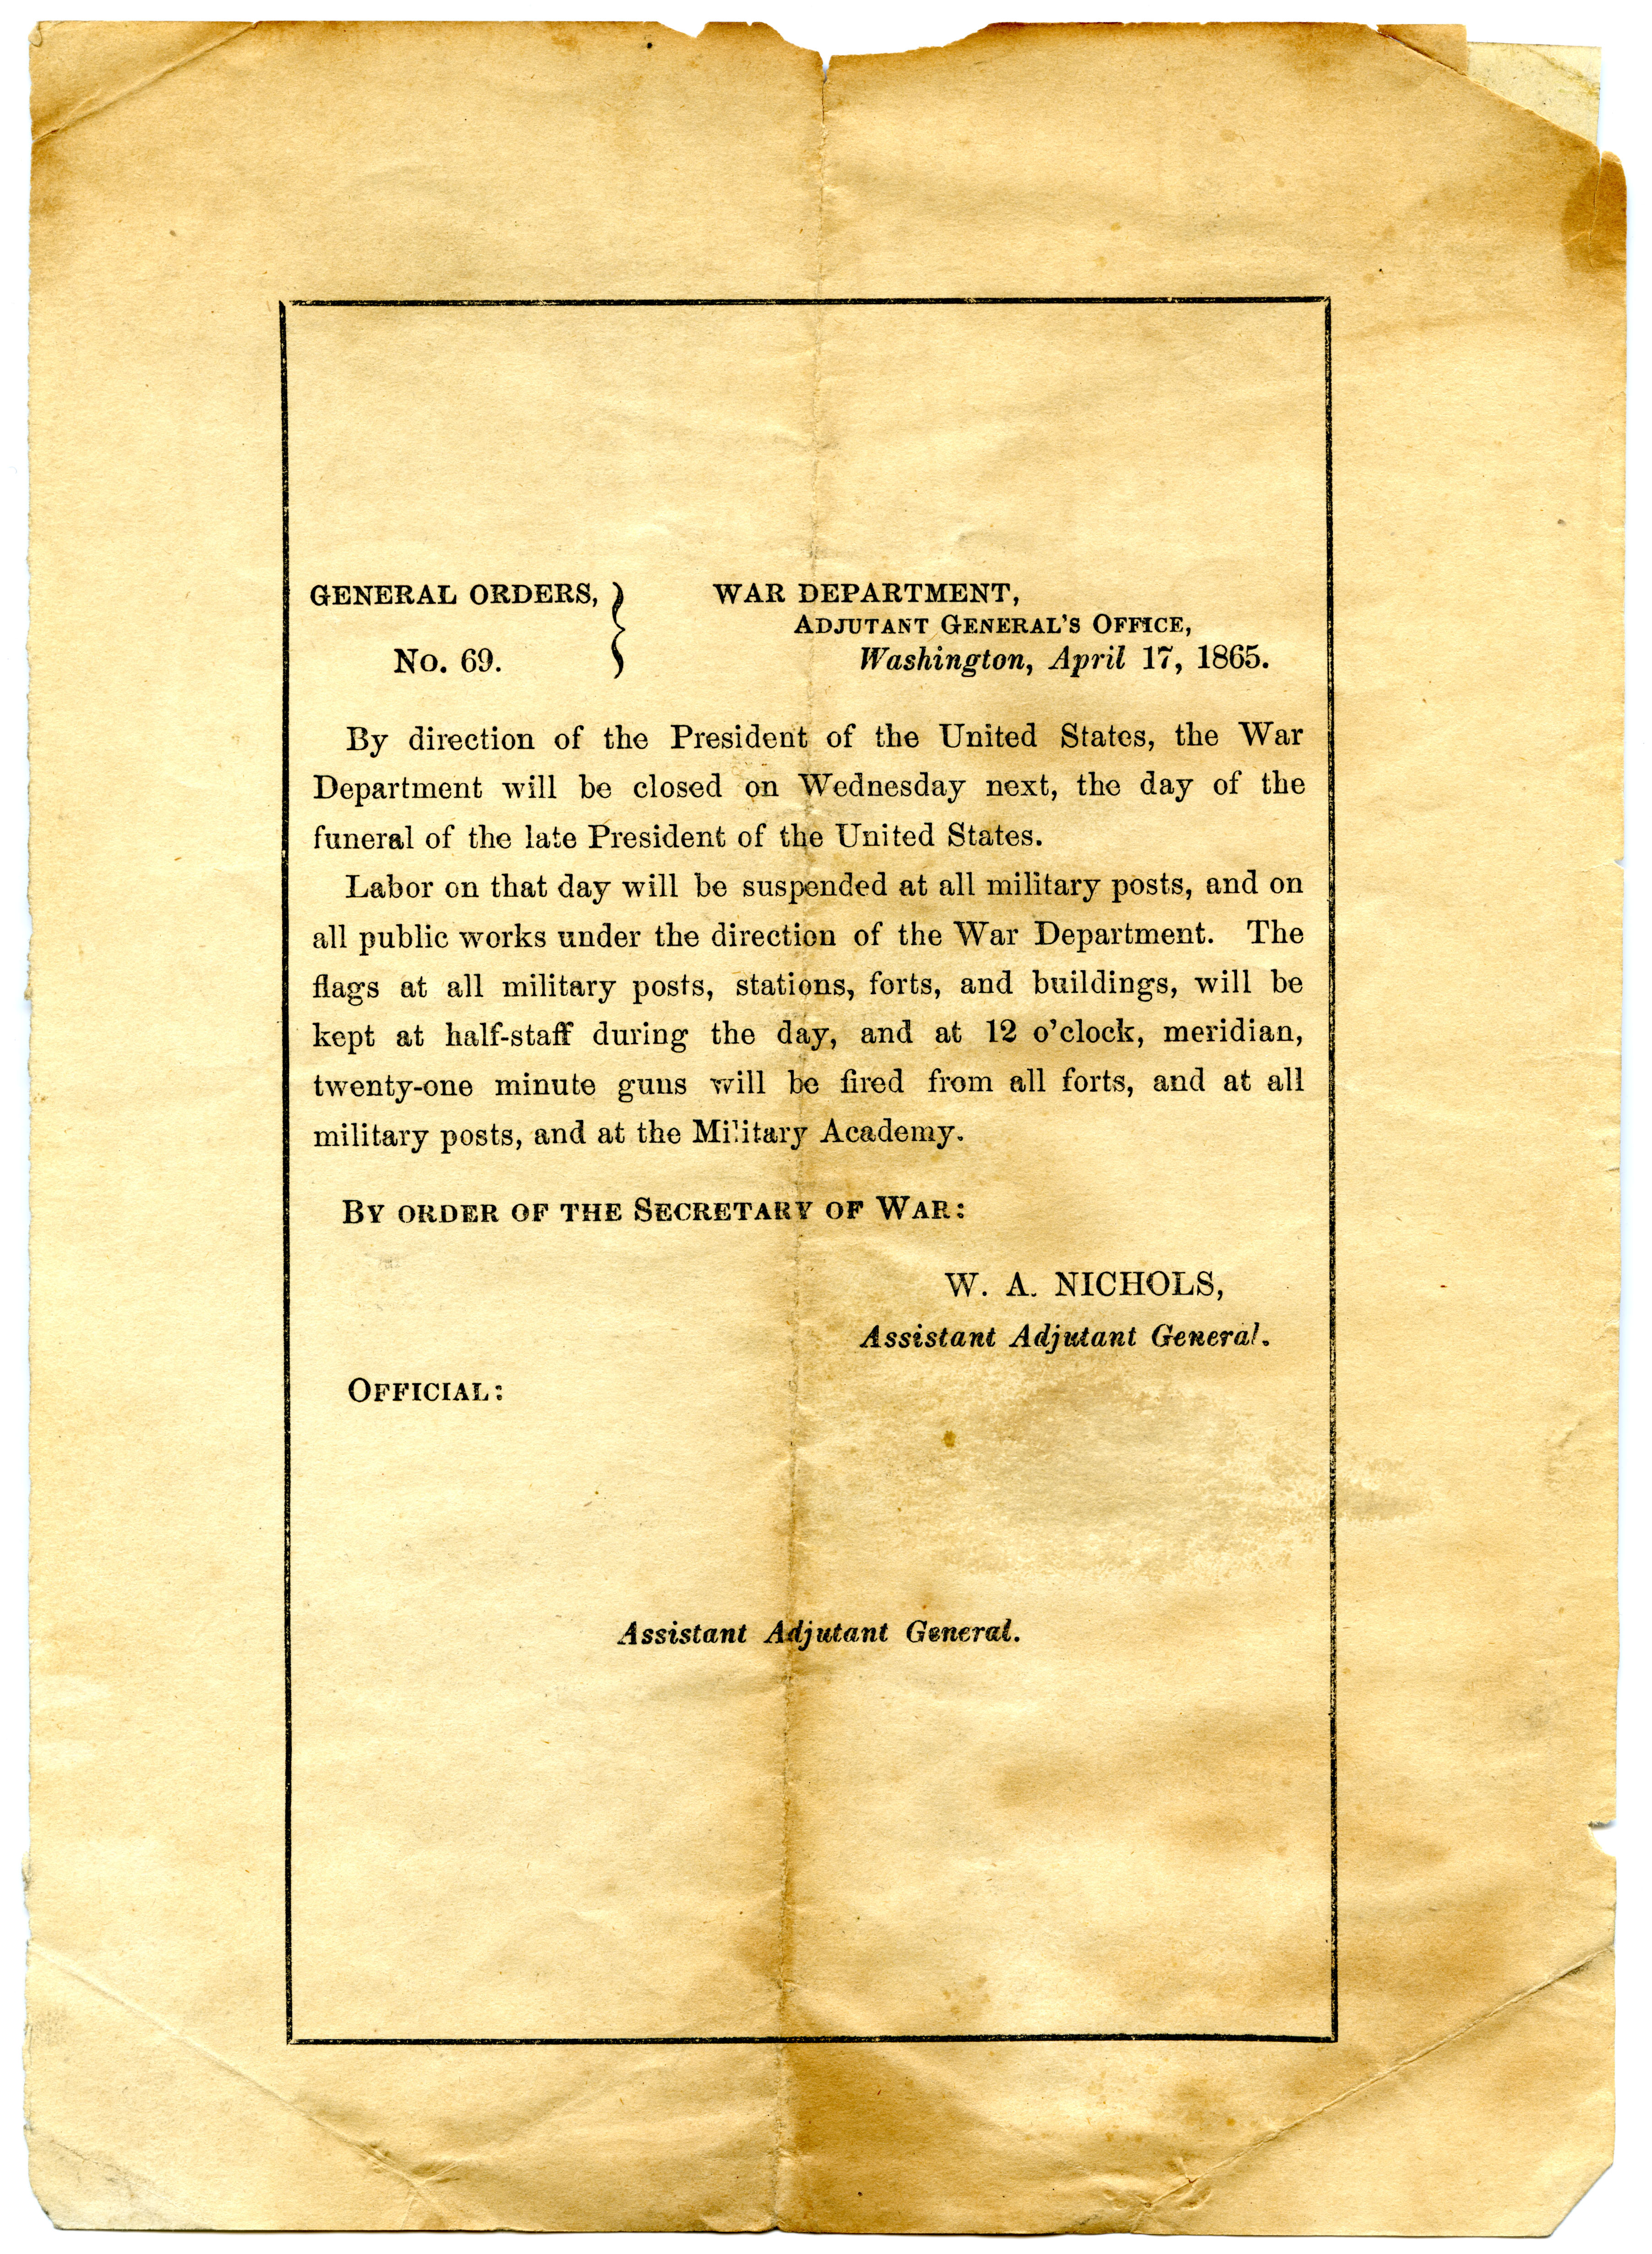 General Orders, No. 69, War Department, Adjutant General's Office, Washington, April 17, 1865